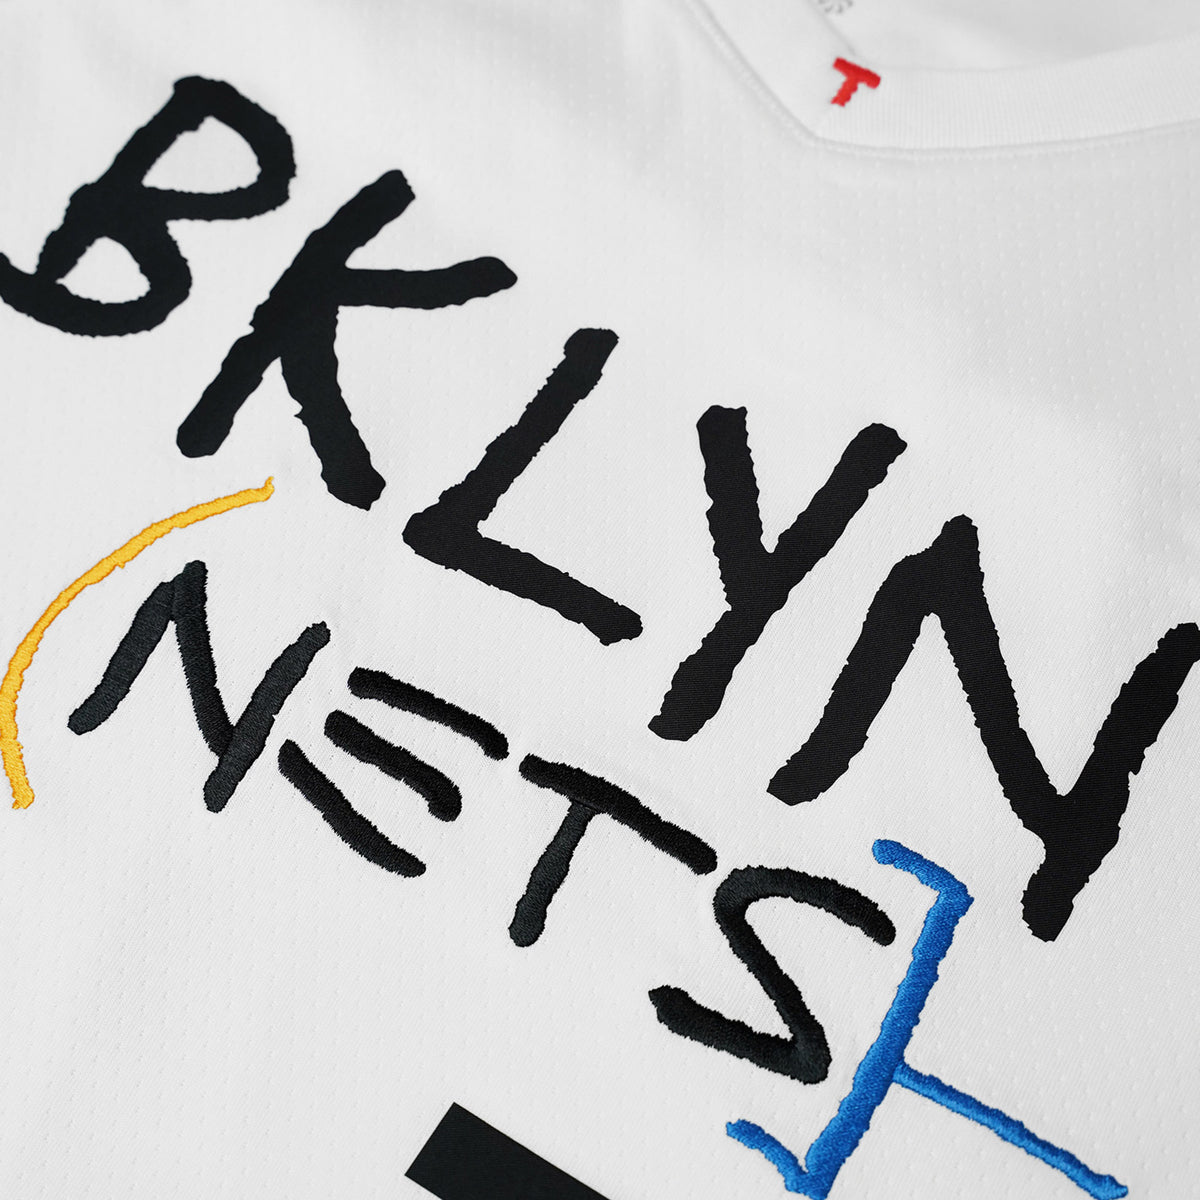 Nike+Brooklyn+Nets+Kevin+Durant+City+Edition+Swingman+Jersey+Basquiat+size+50  for sale online